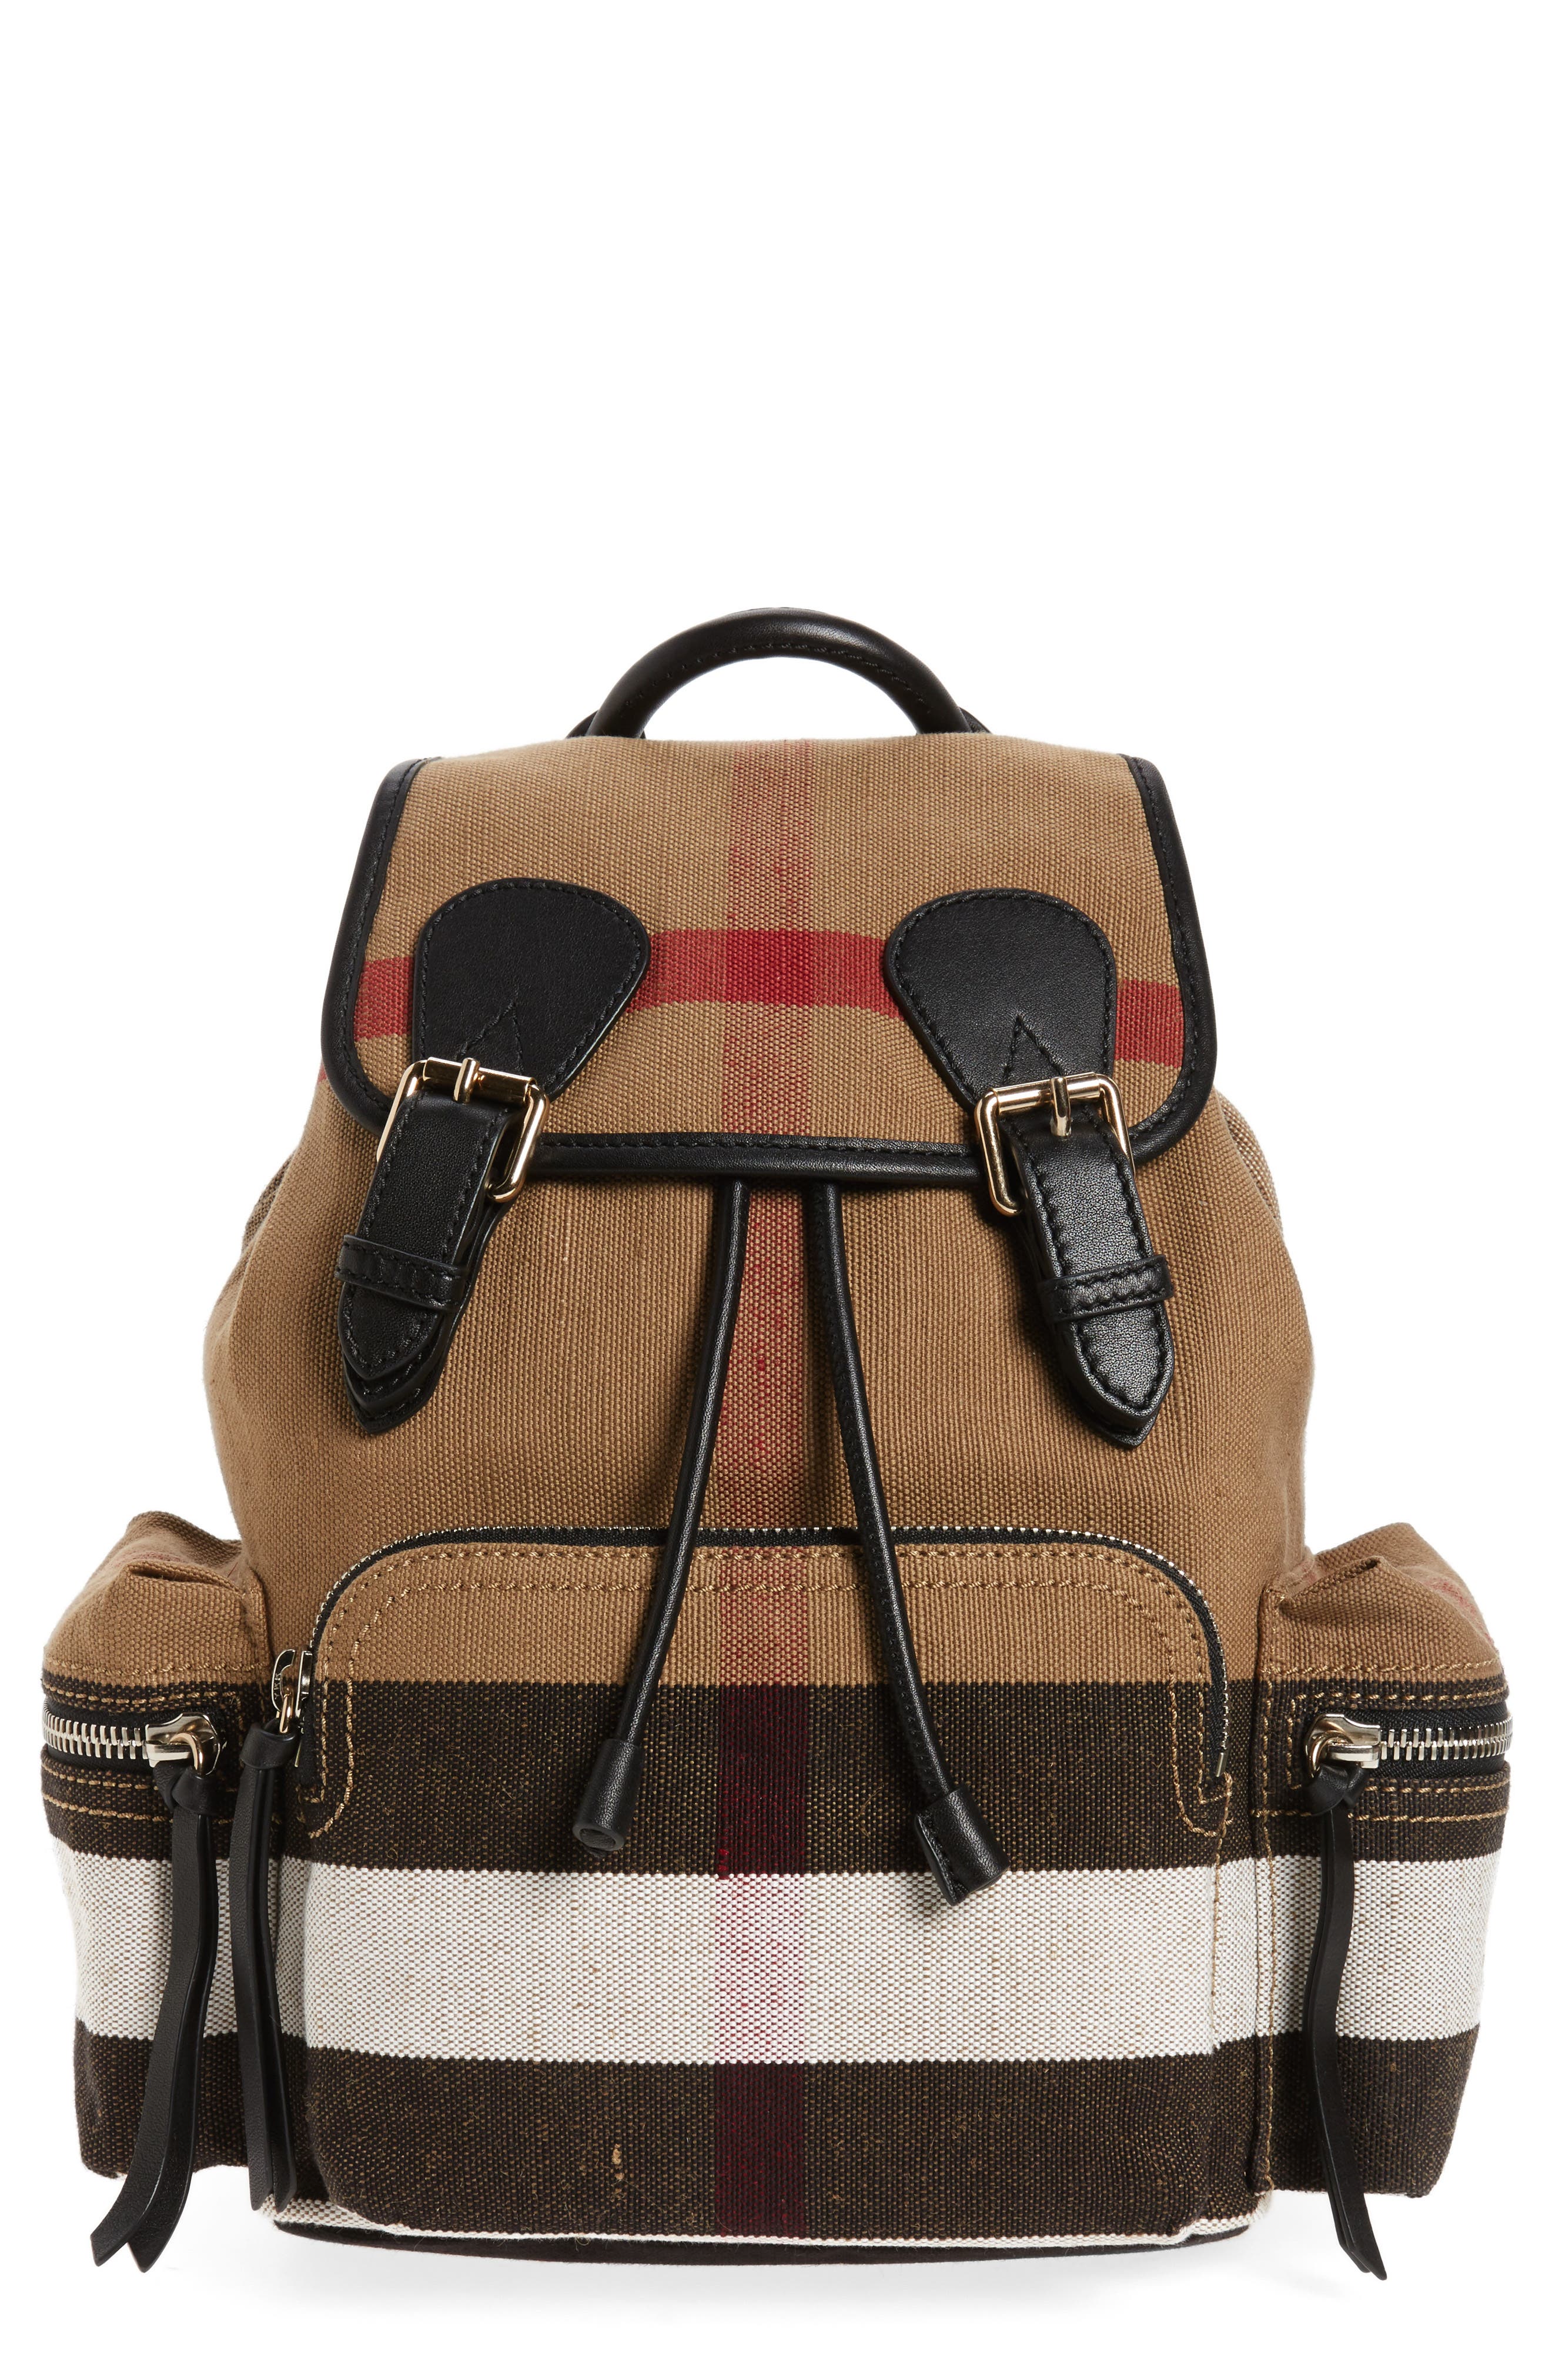 nordstrom burberry backpack